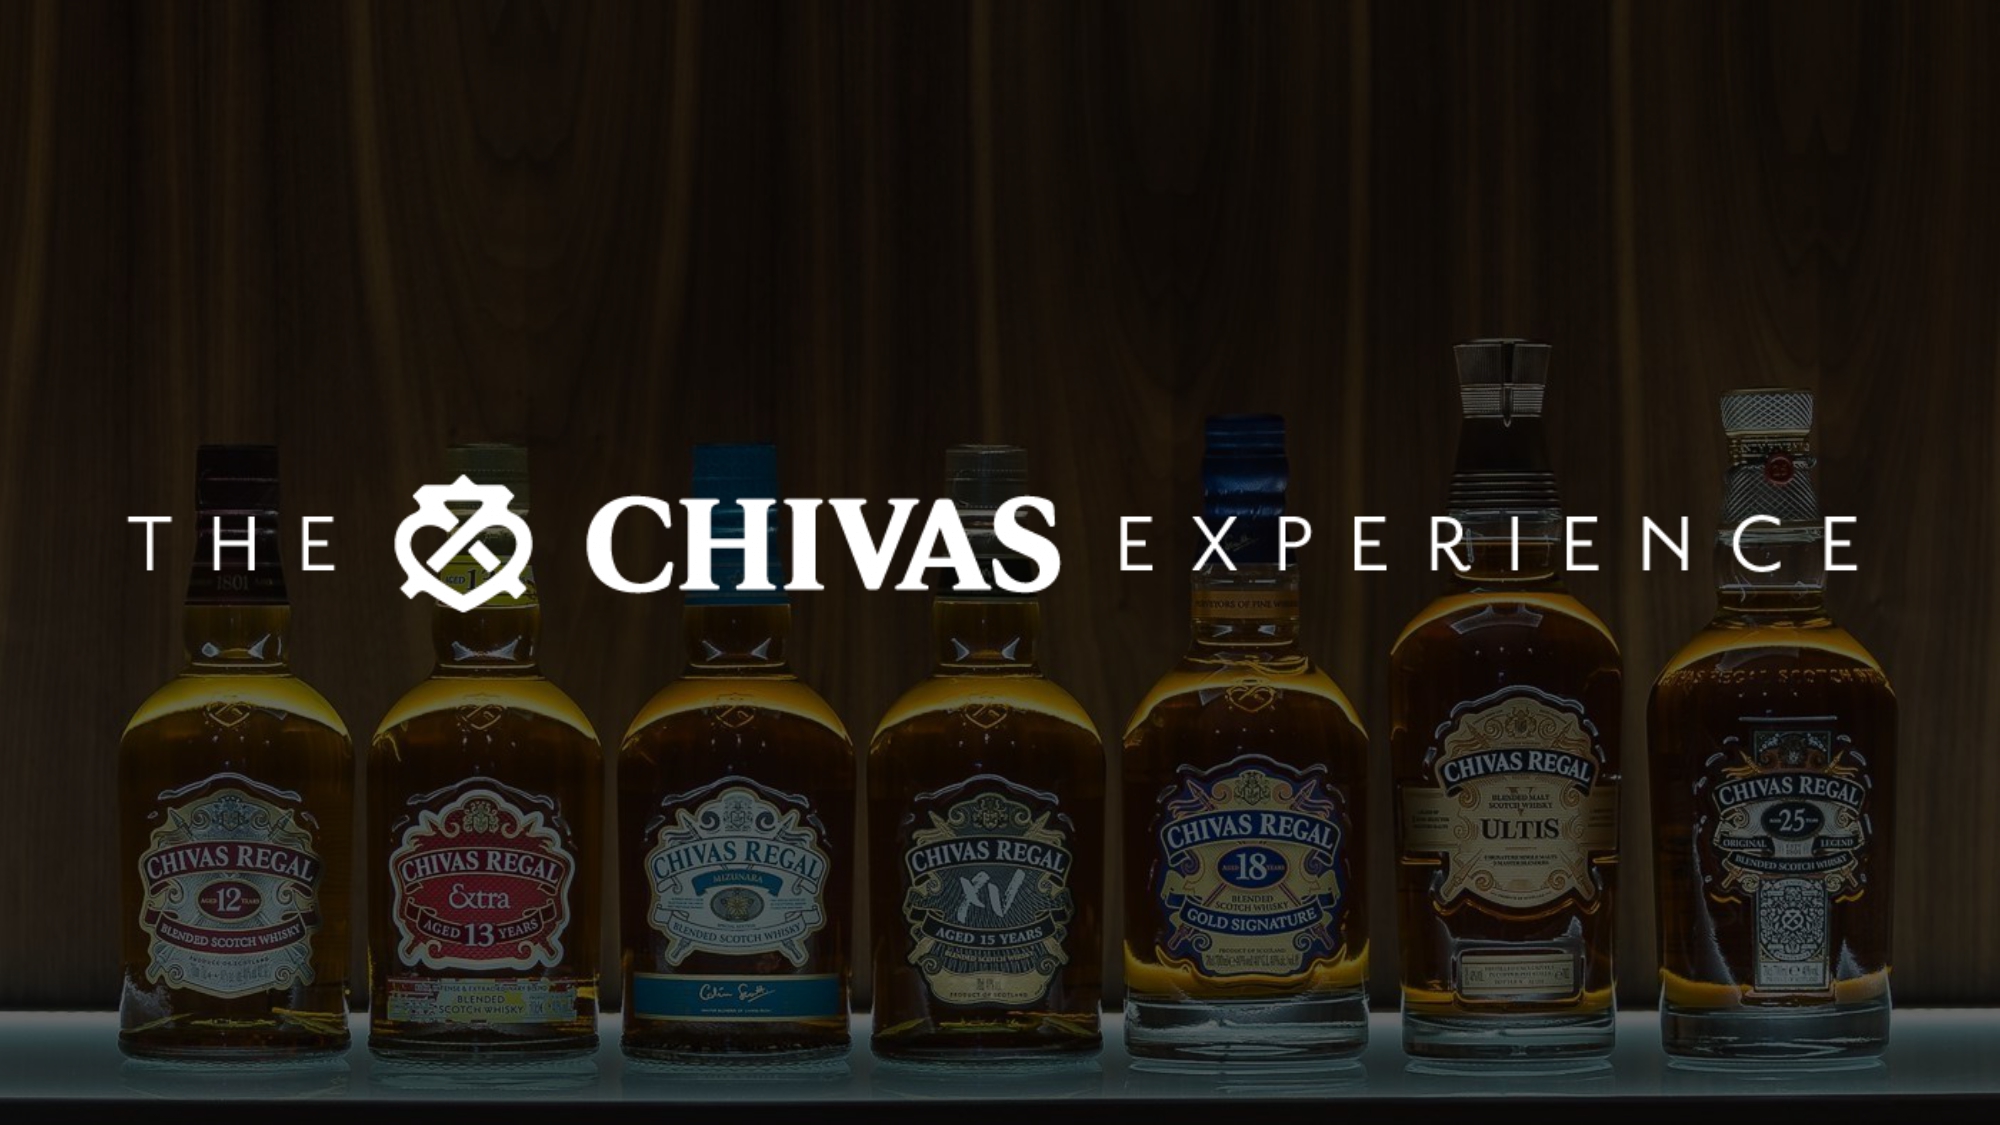 The Chivas Experience